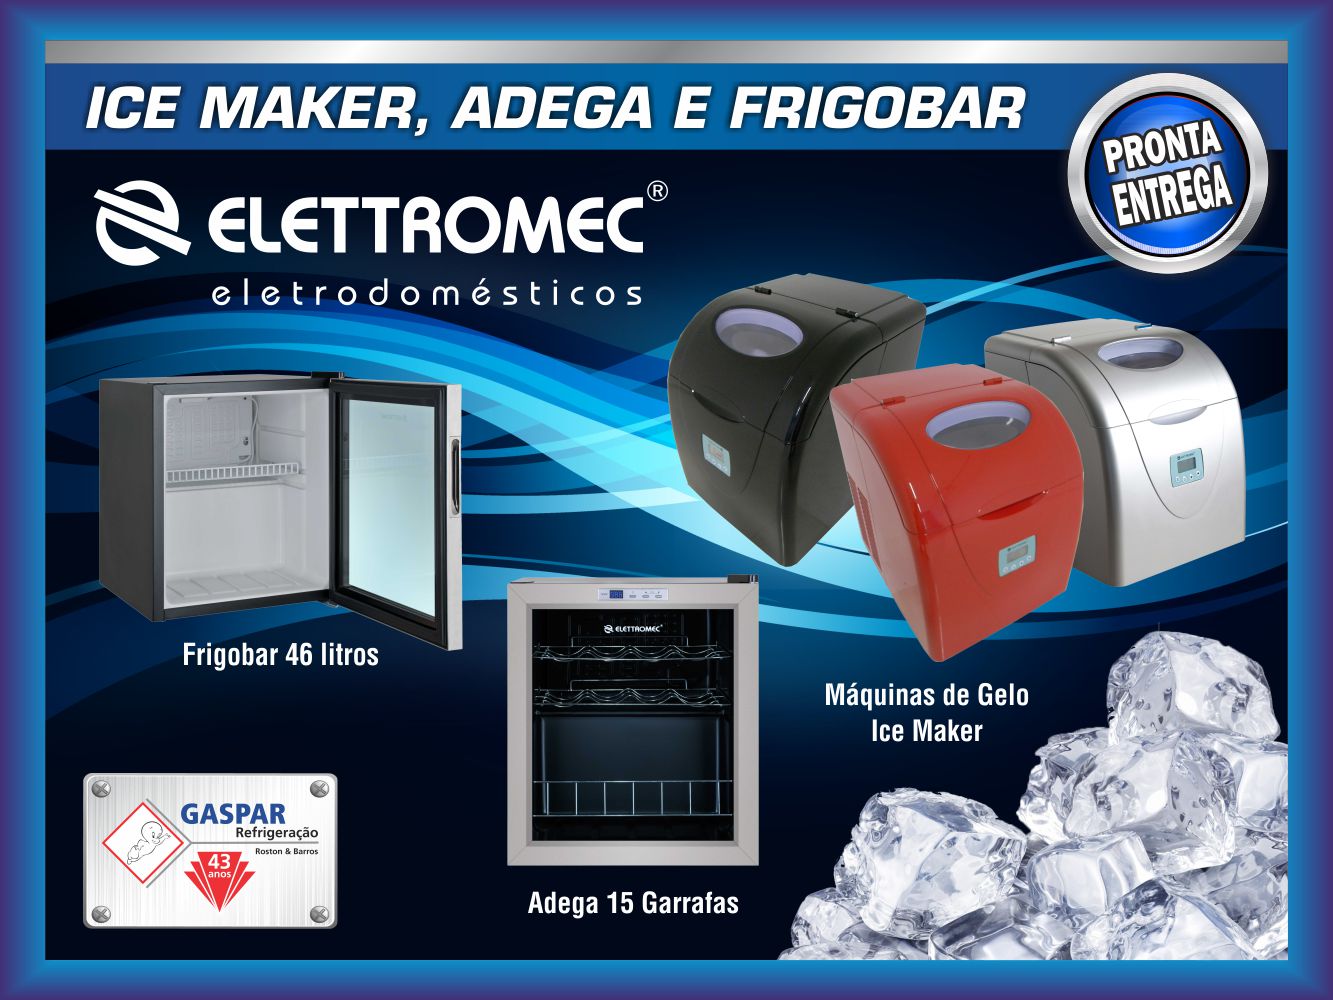 Ice Maker, Adega e Frigobar - Elettromec